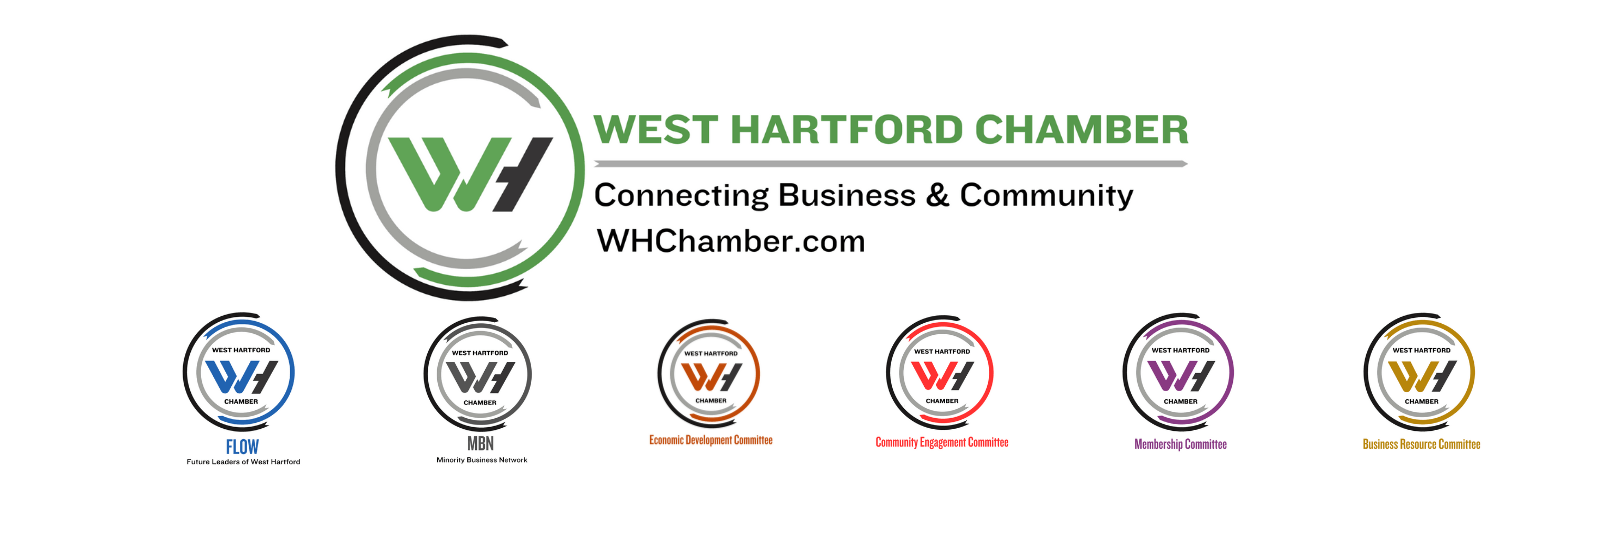 West Hartford Chamber Logos